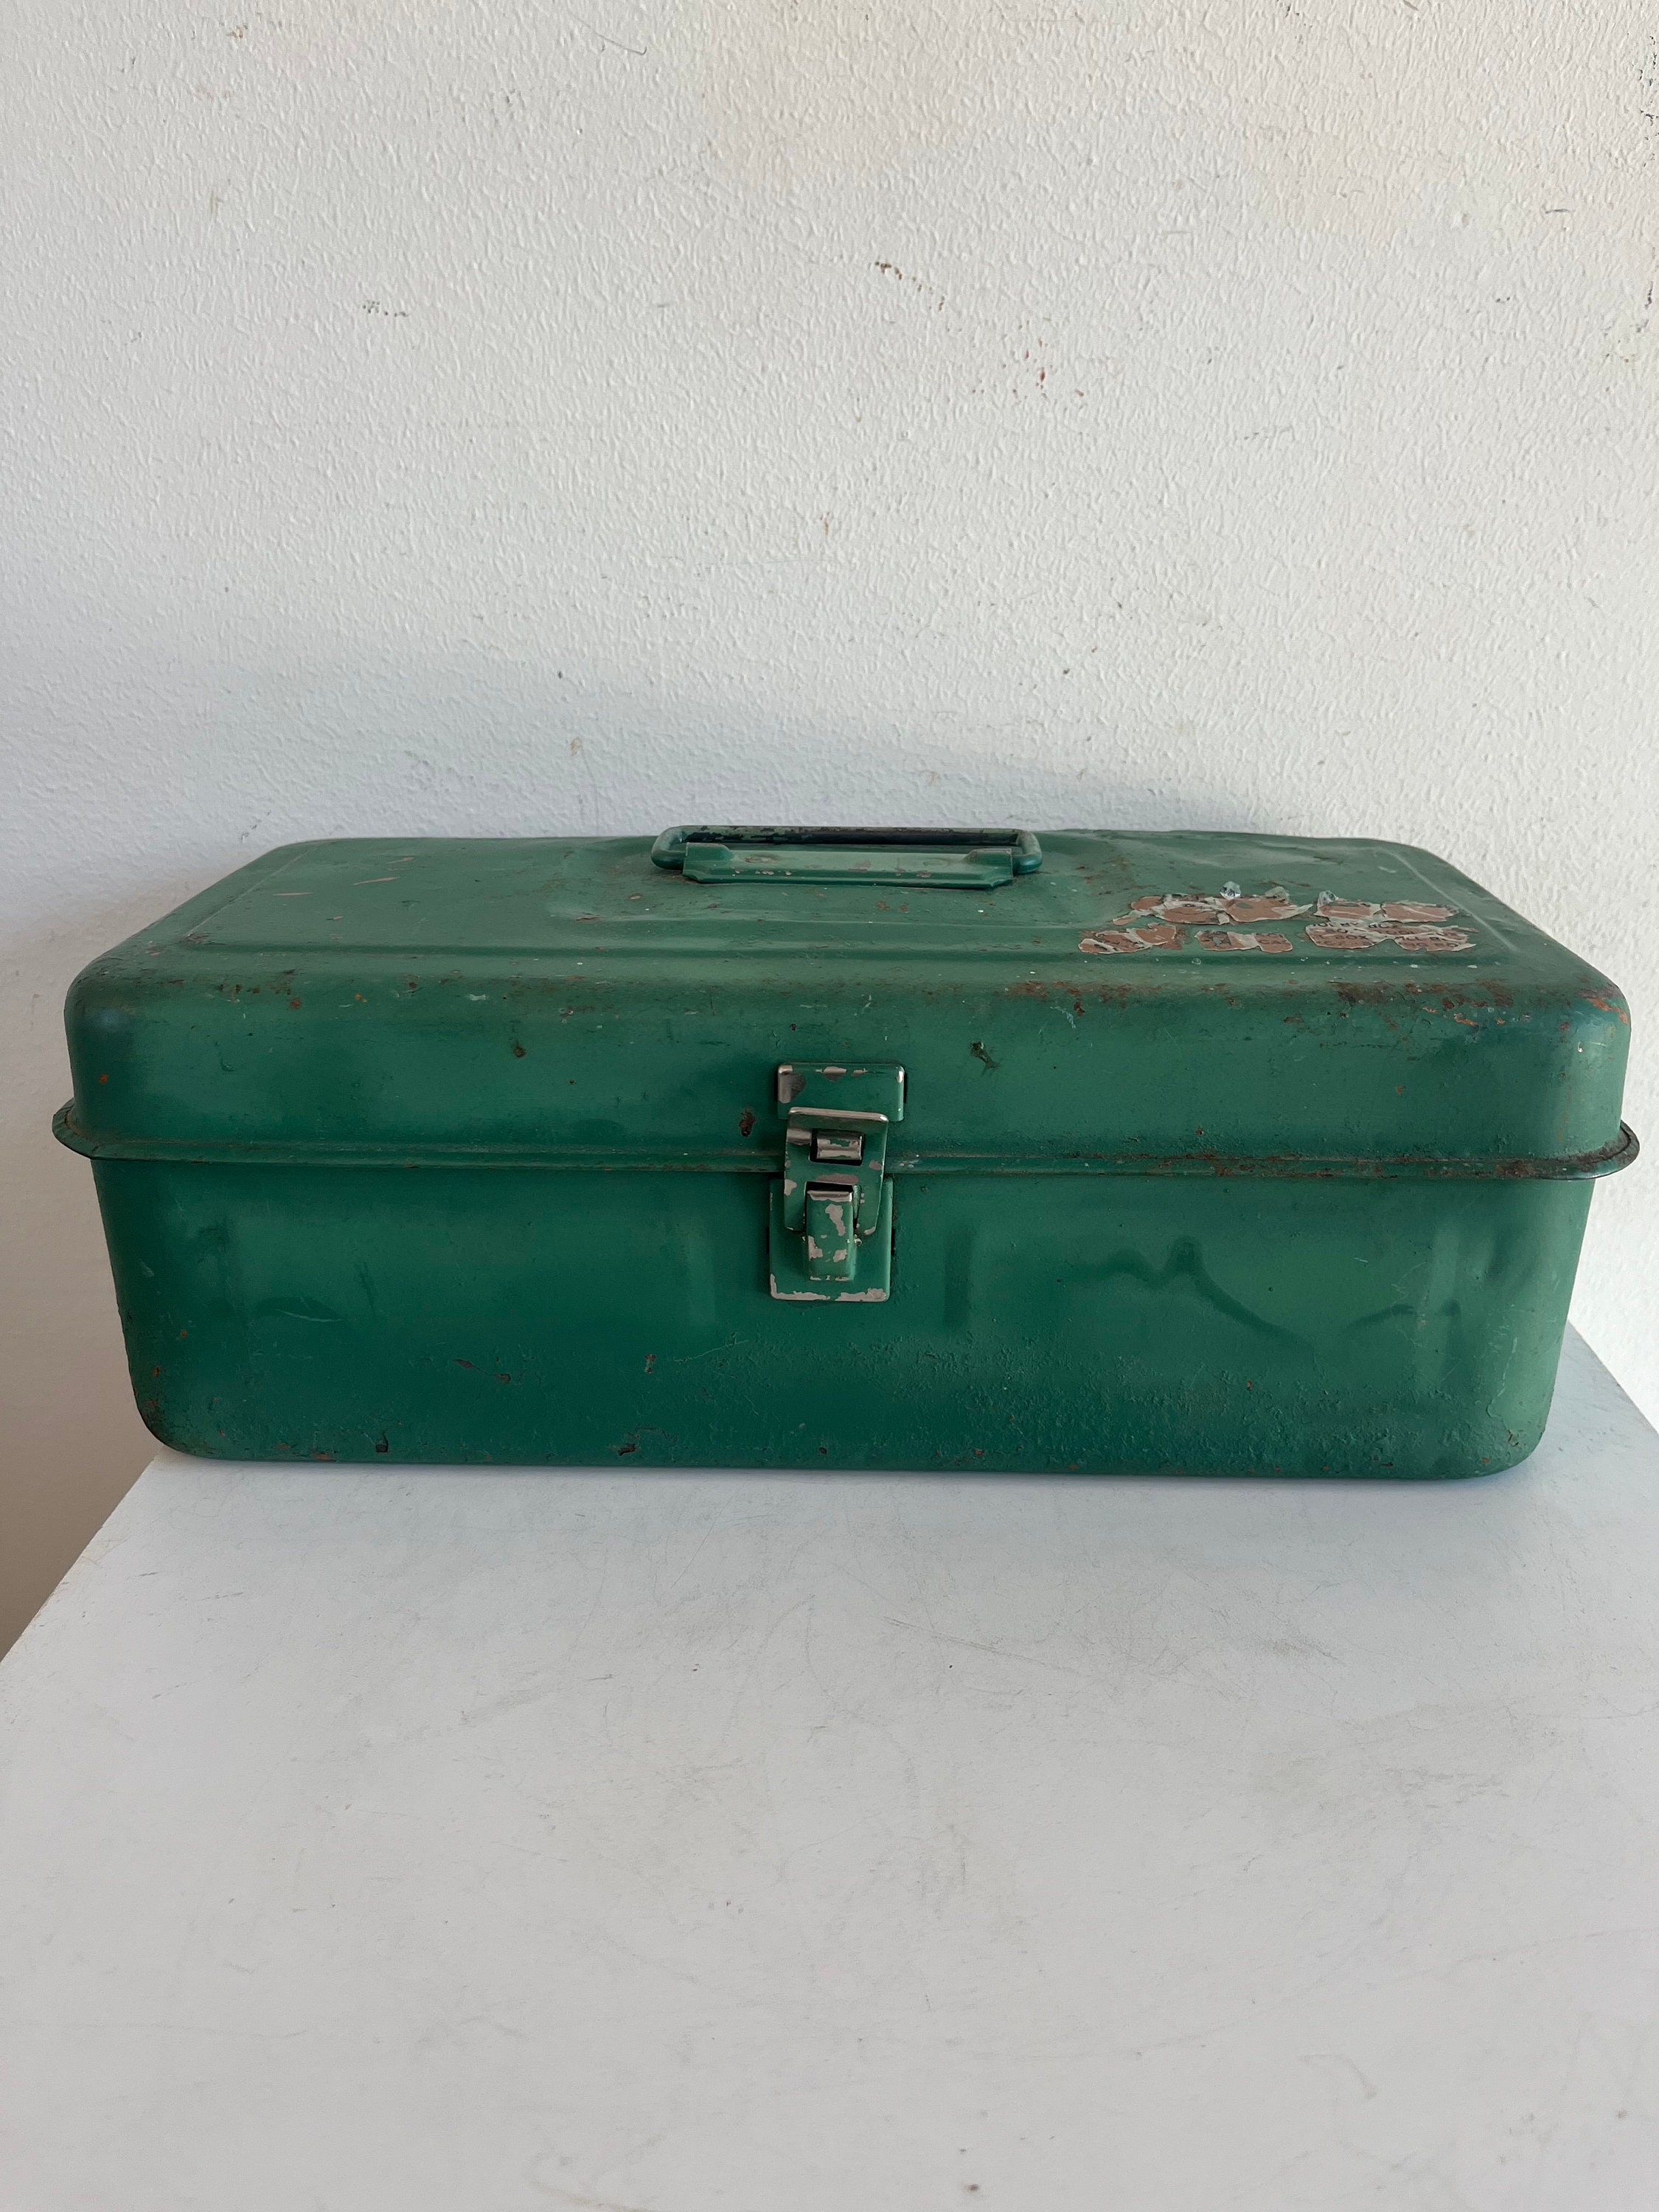 Vintage Metal Green Tackle or Tool Box 